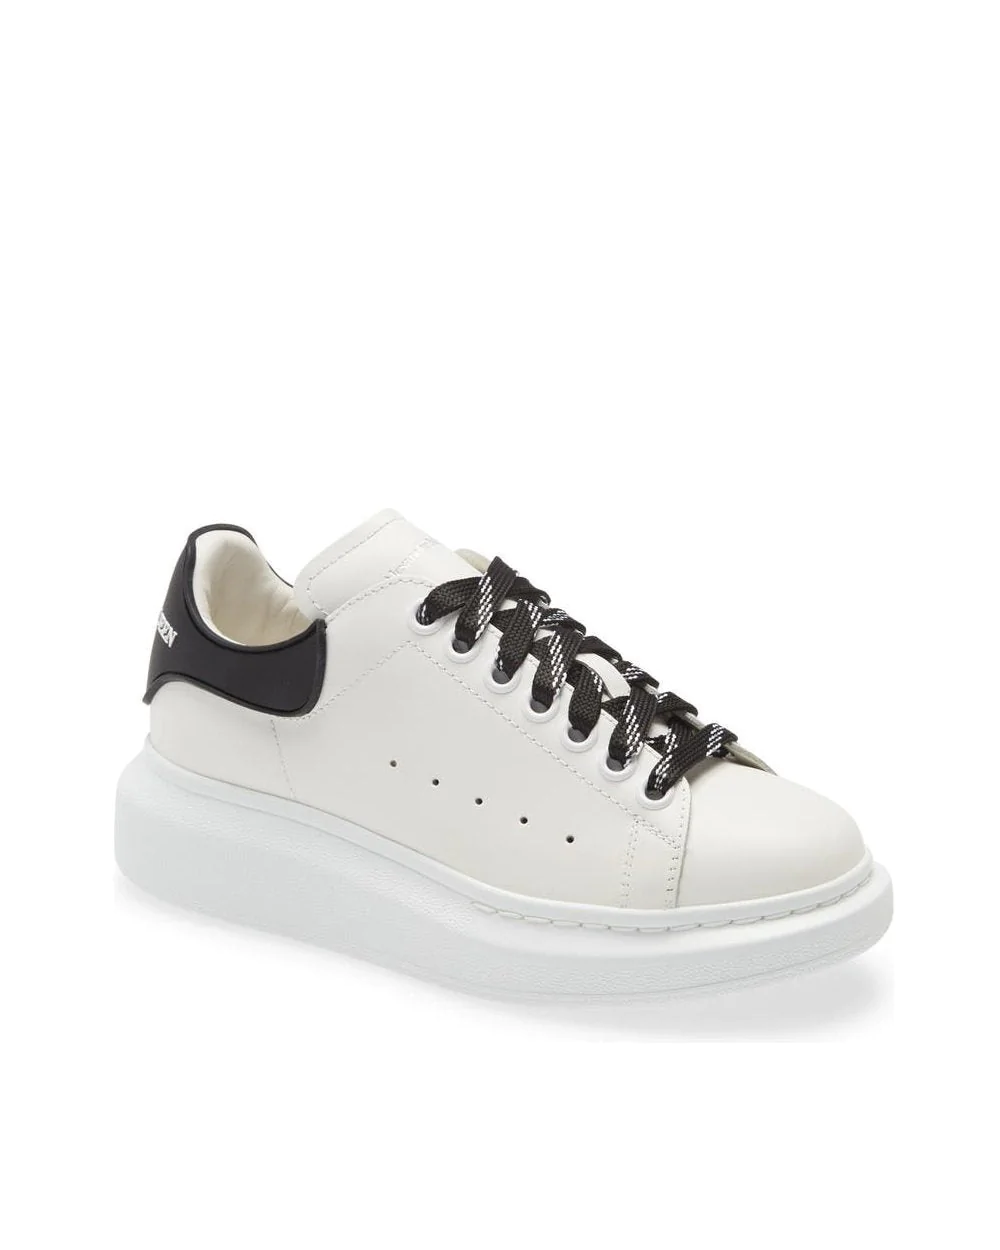 Alexander McQueen Men's Platform Sneaker, Black White